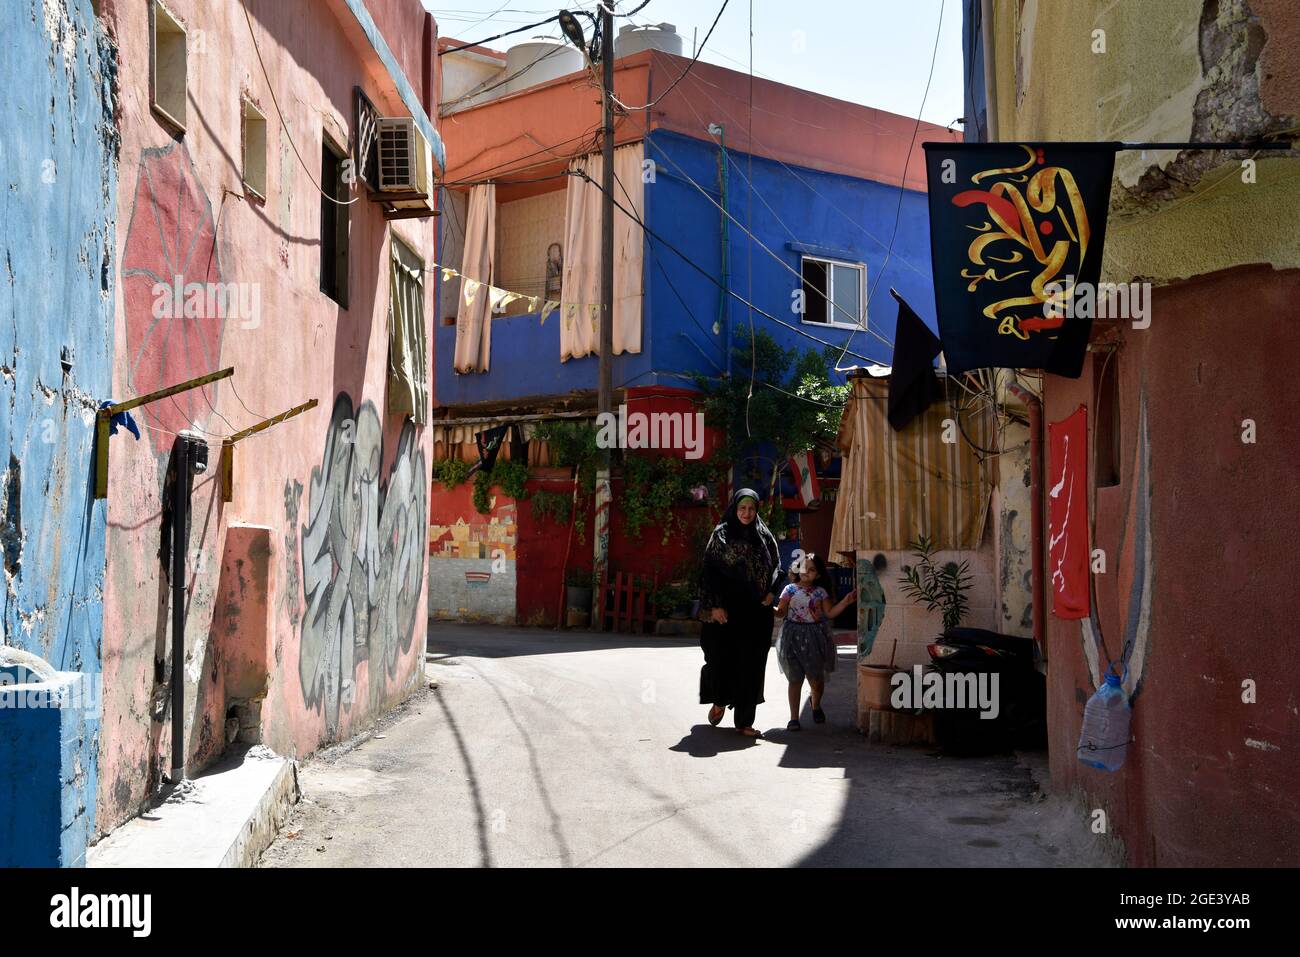 The poor neighbourhood of Ouzai, southern suburbs, Beirut, Lebanon. Stock Photo